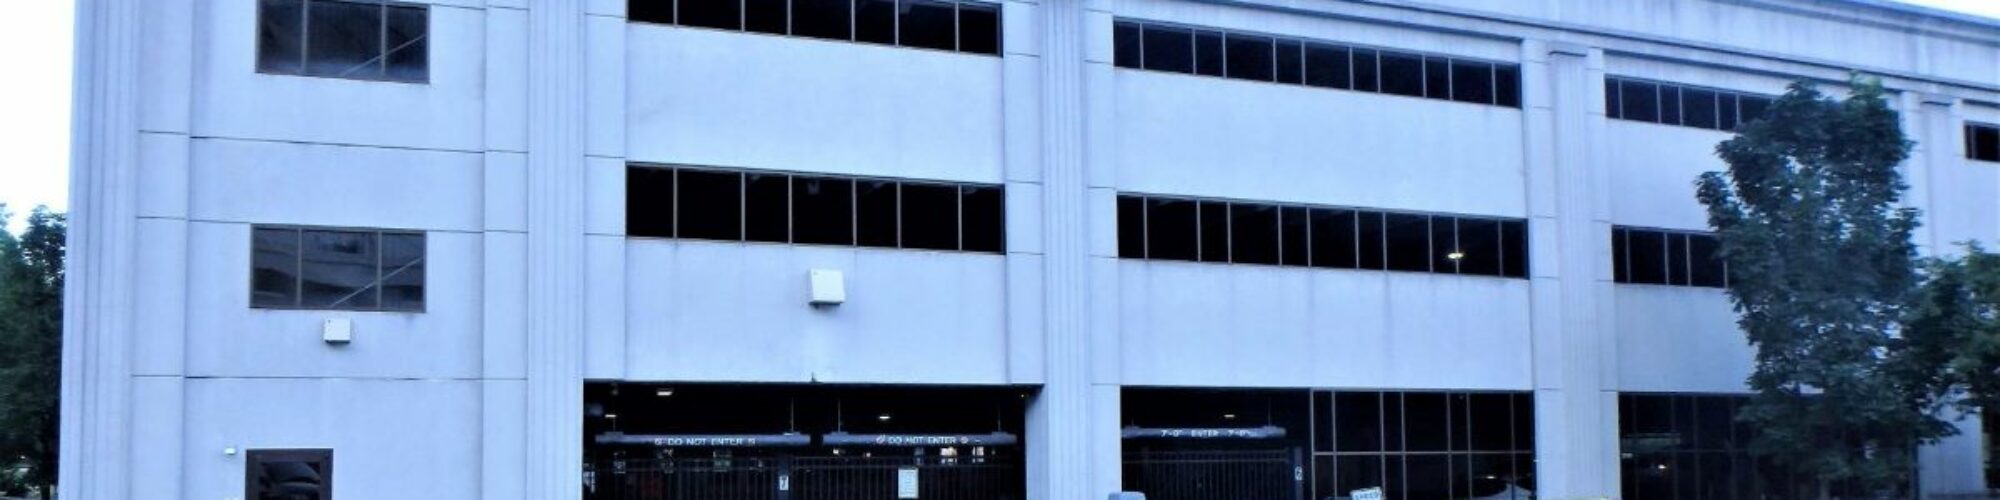 WV State Capitol Piedmont Parking Garage - Building 13